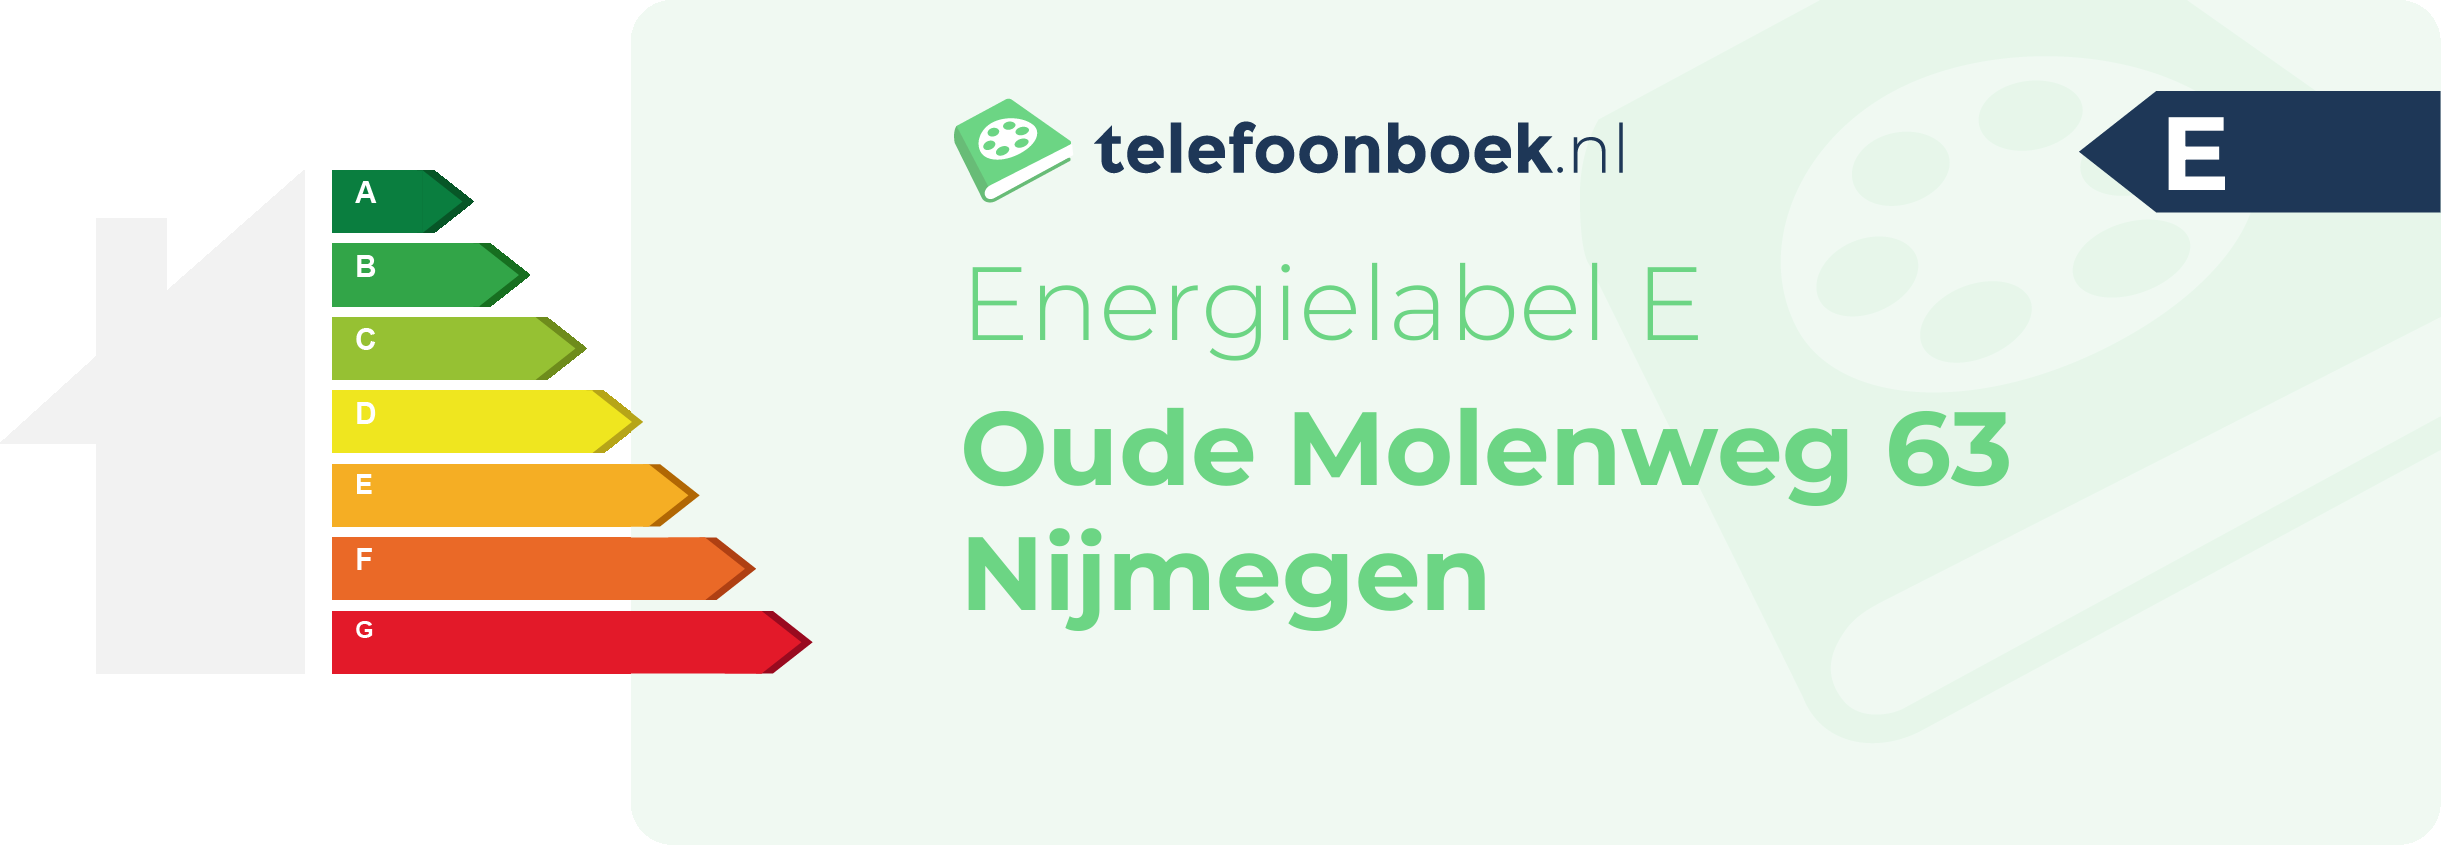 Energielabel Oude Molenweg 63 Nijmegen